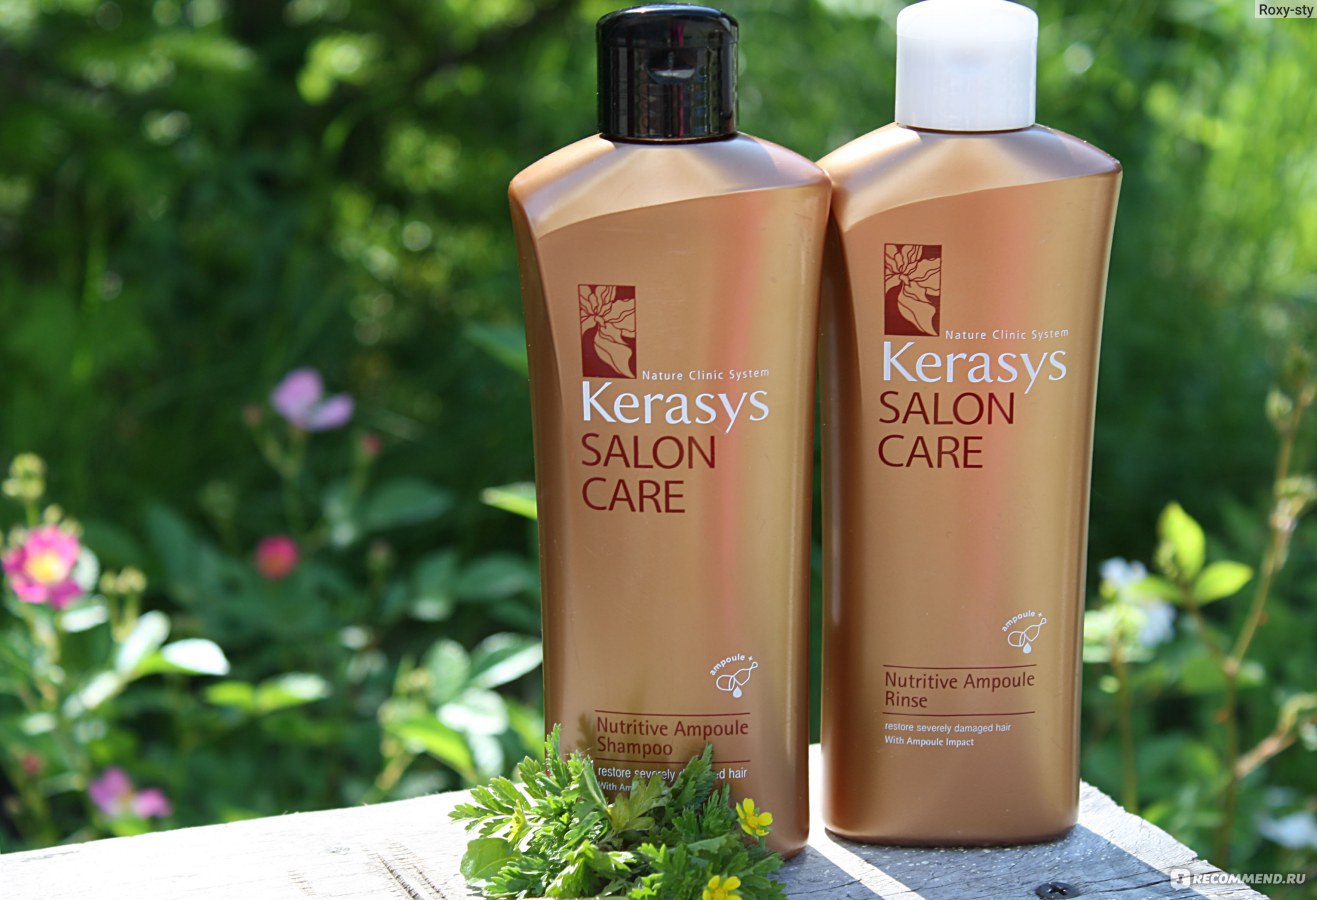 Маска для волос kerasys salon care moringa texturizer treatment